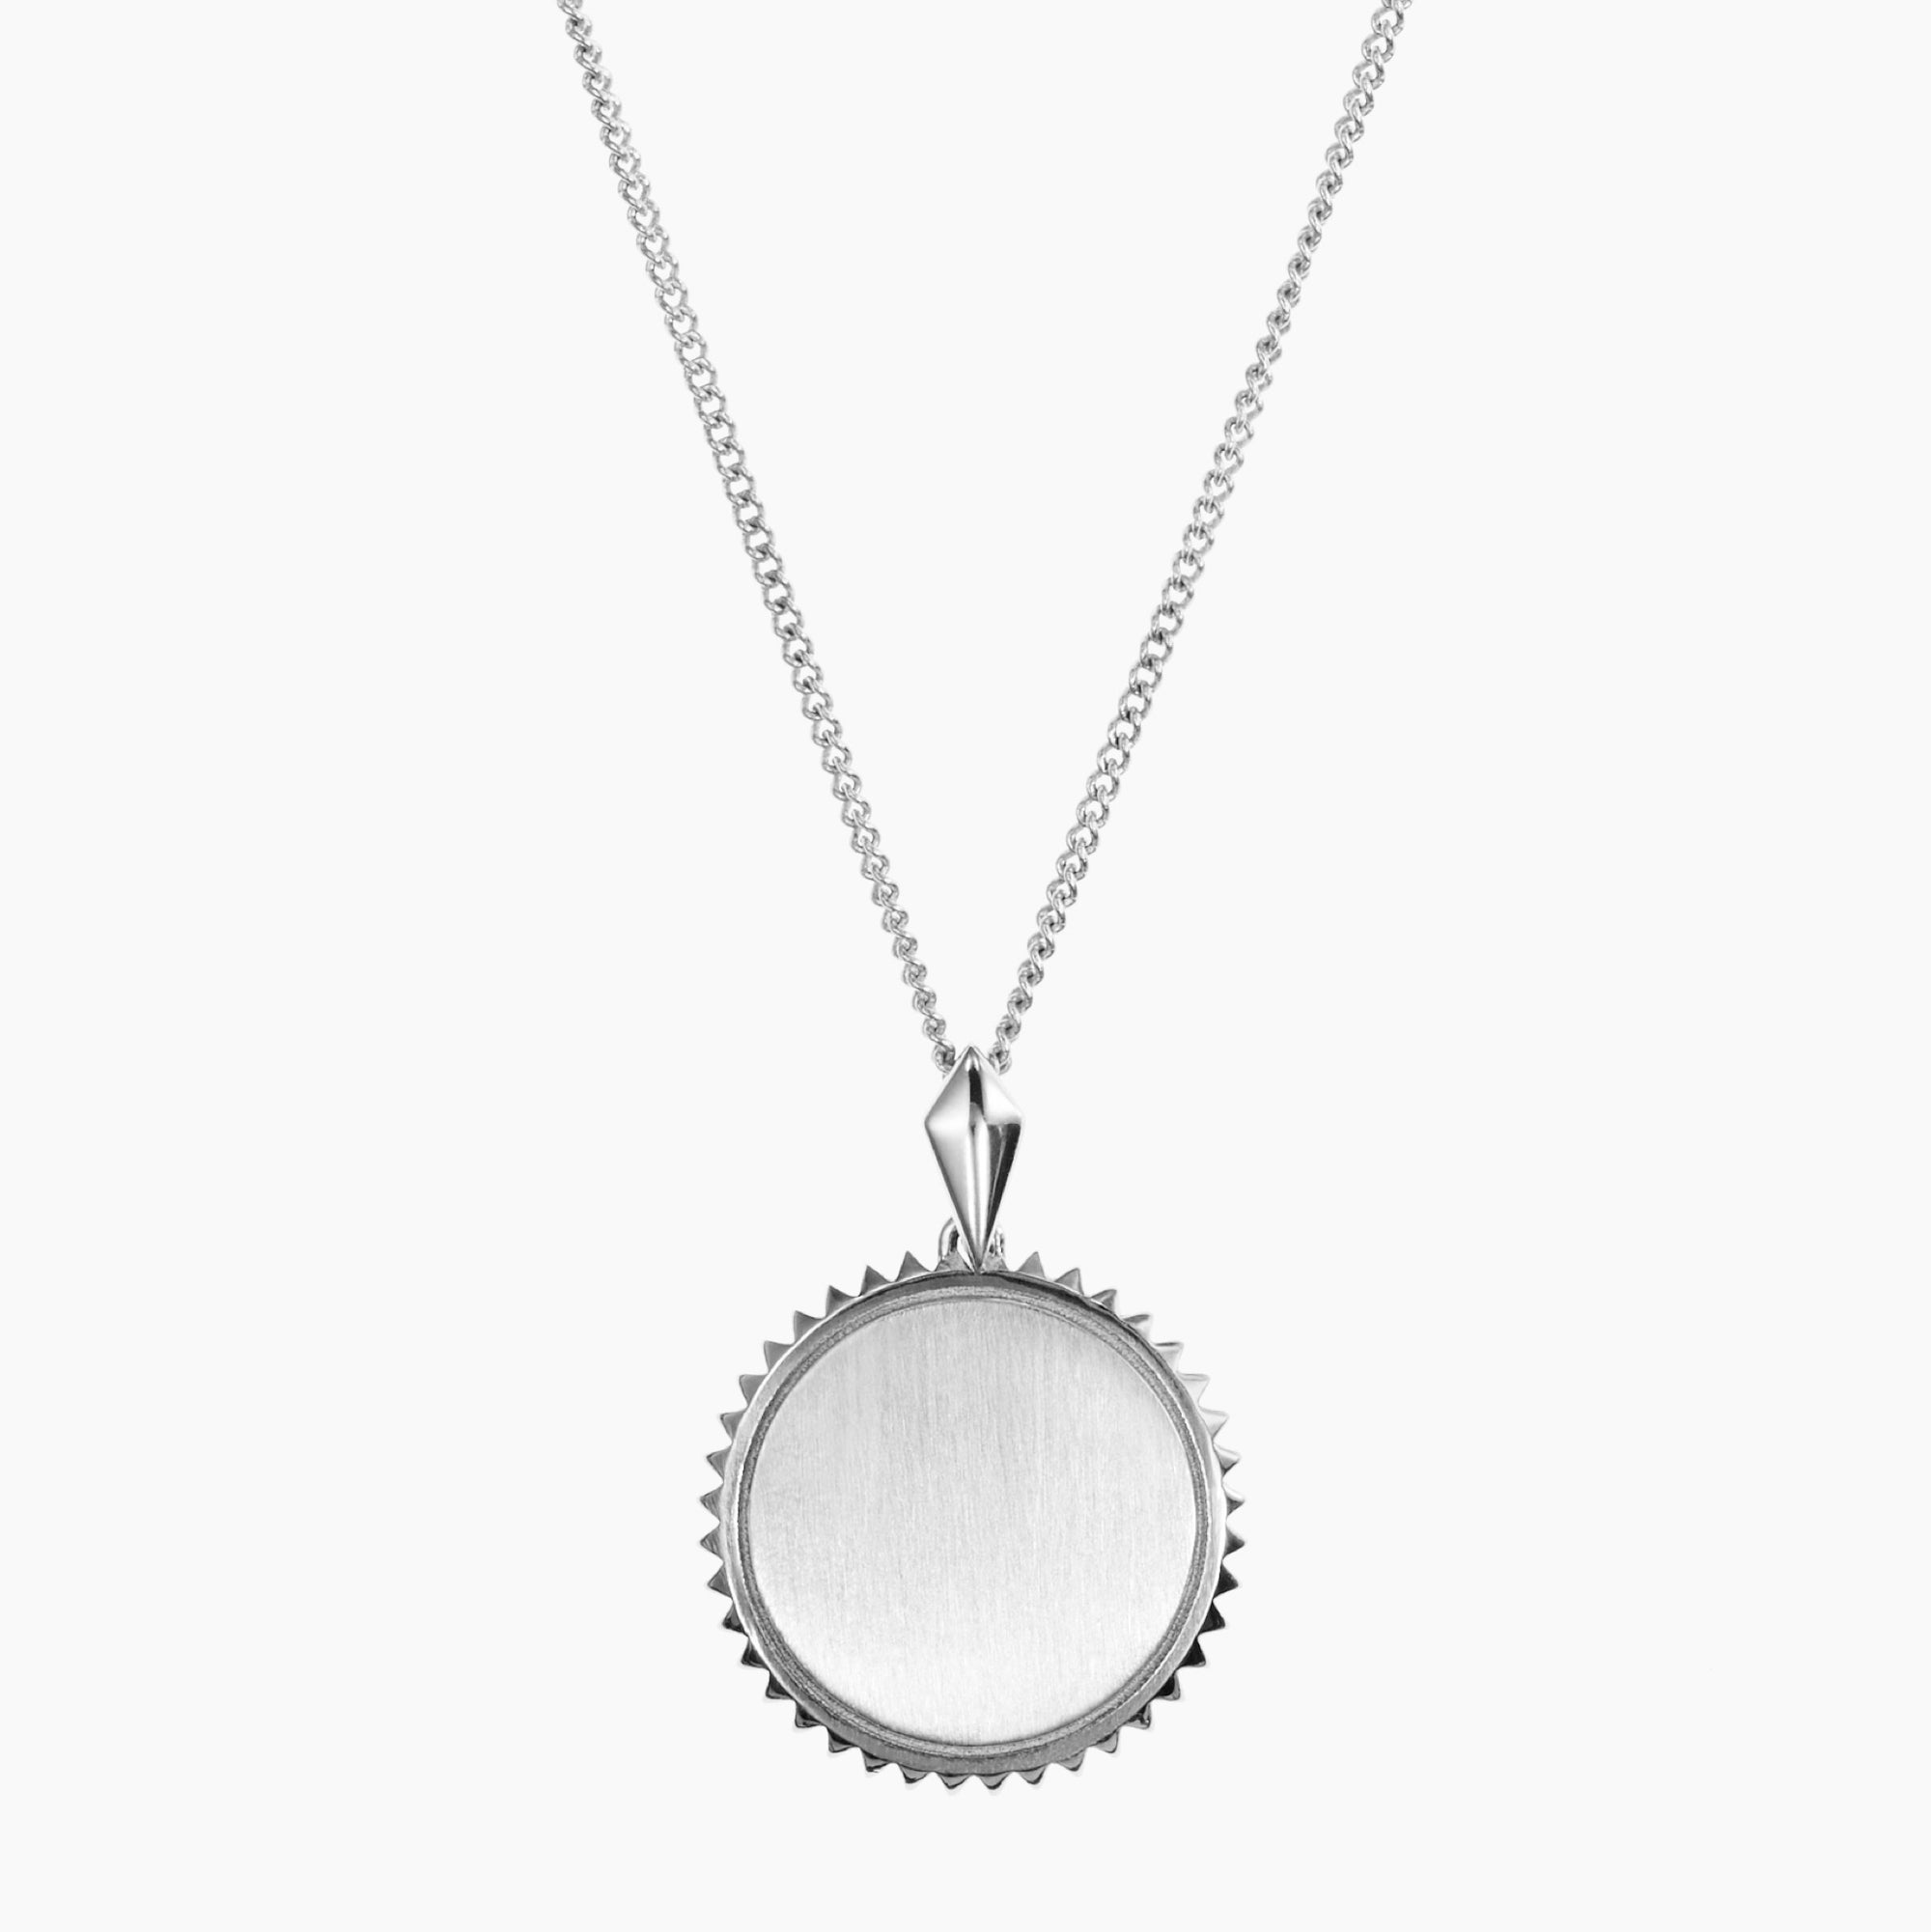 Custom Sunburst Necklace in Sterling Silver